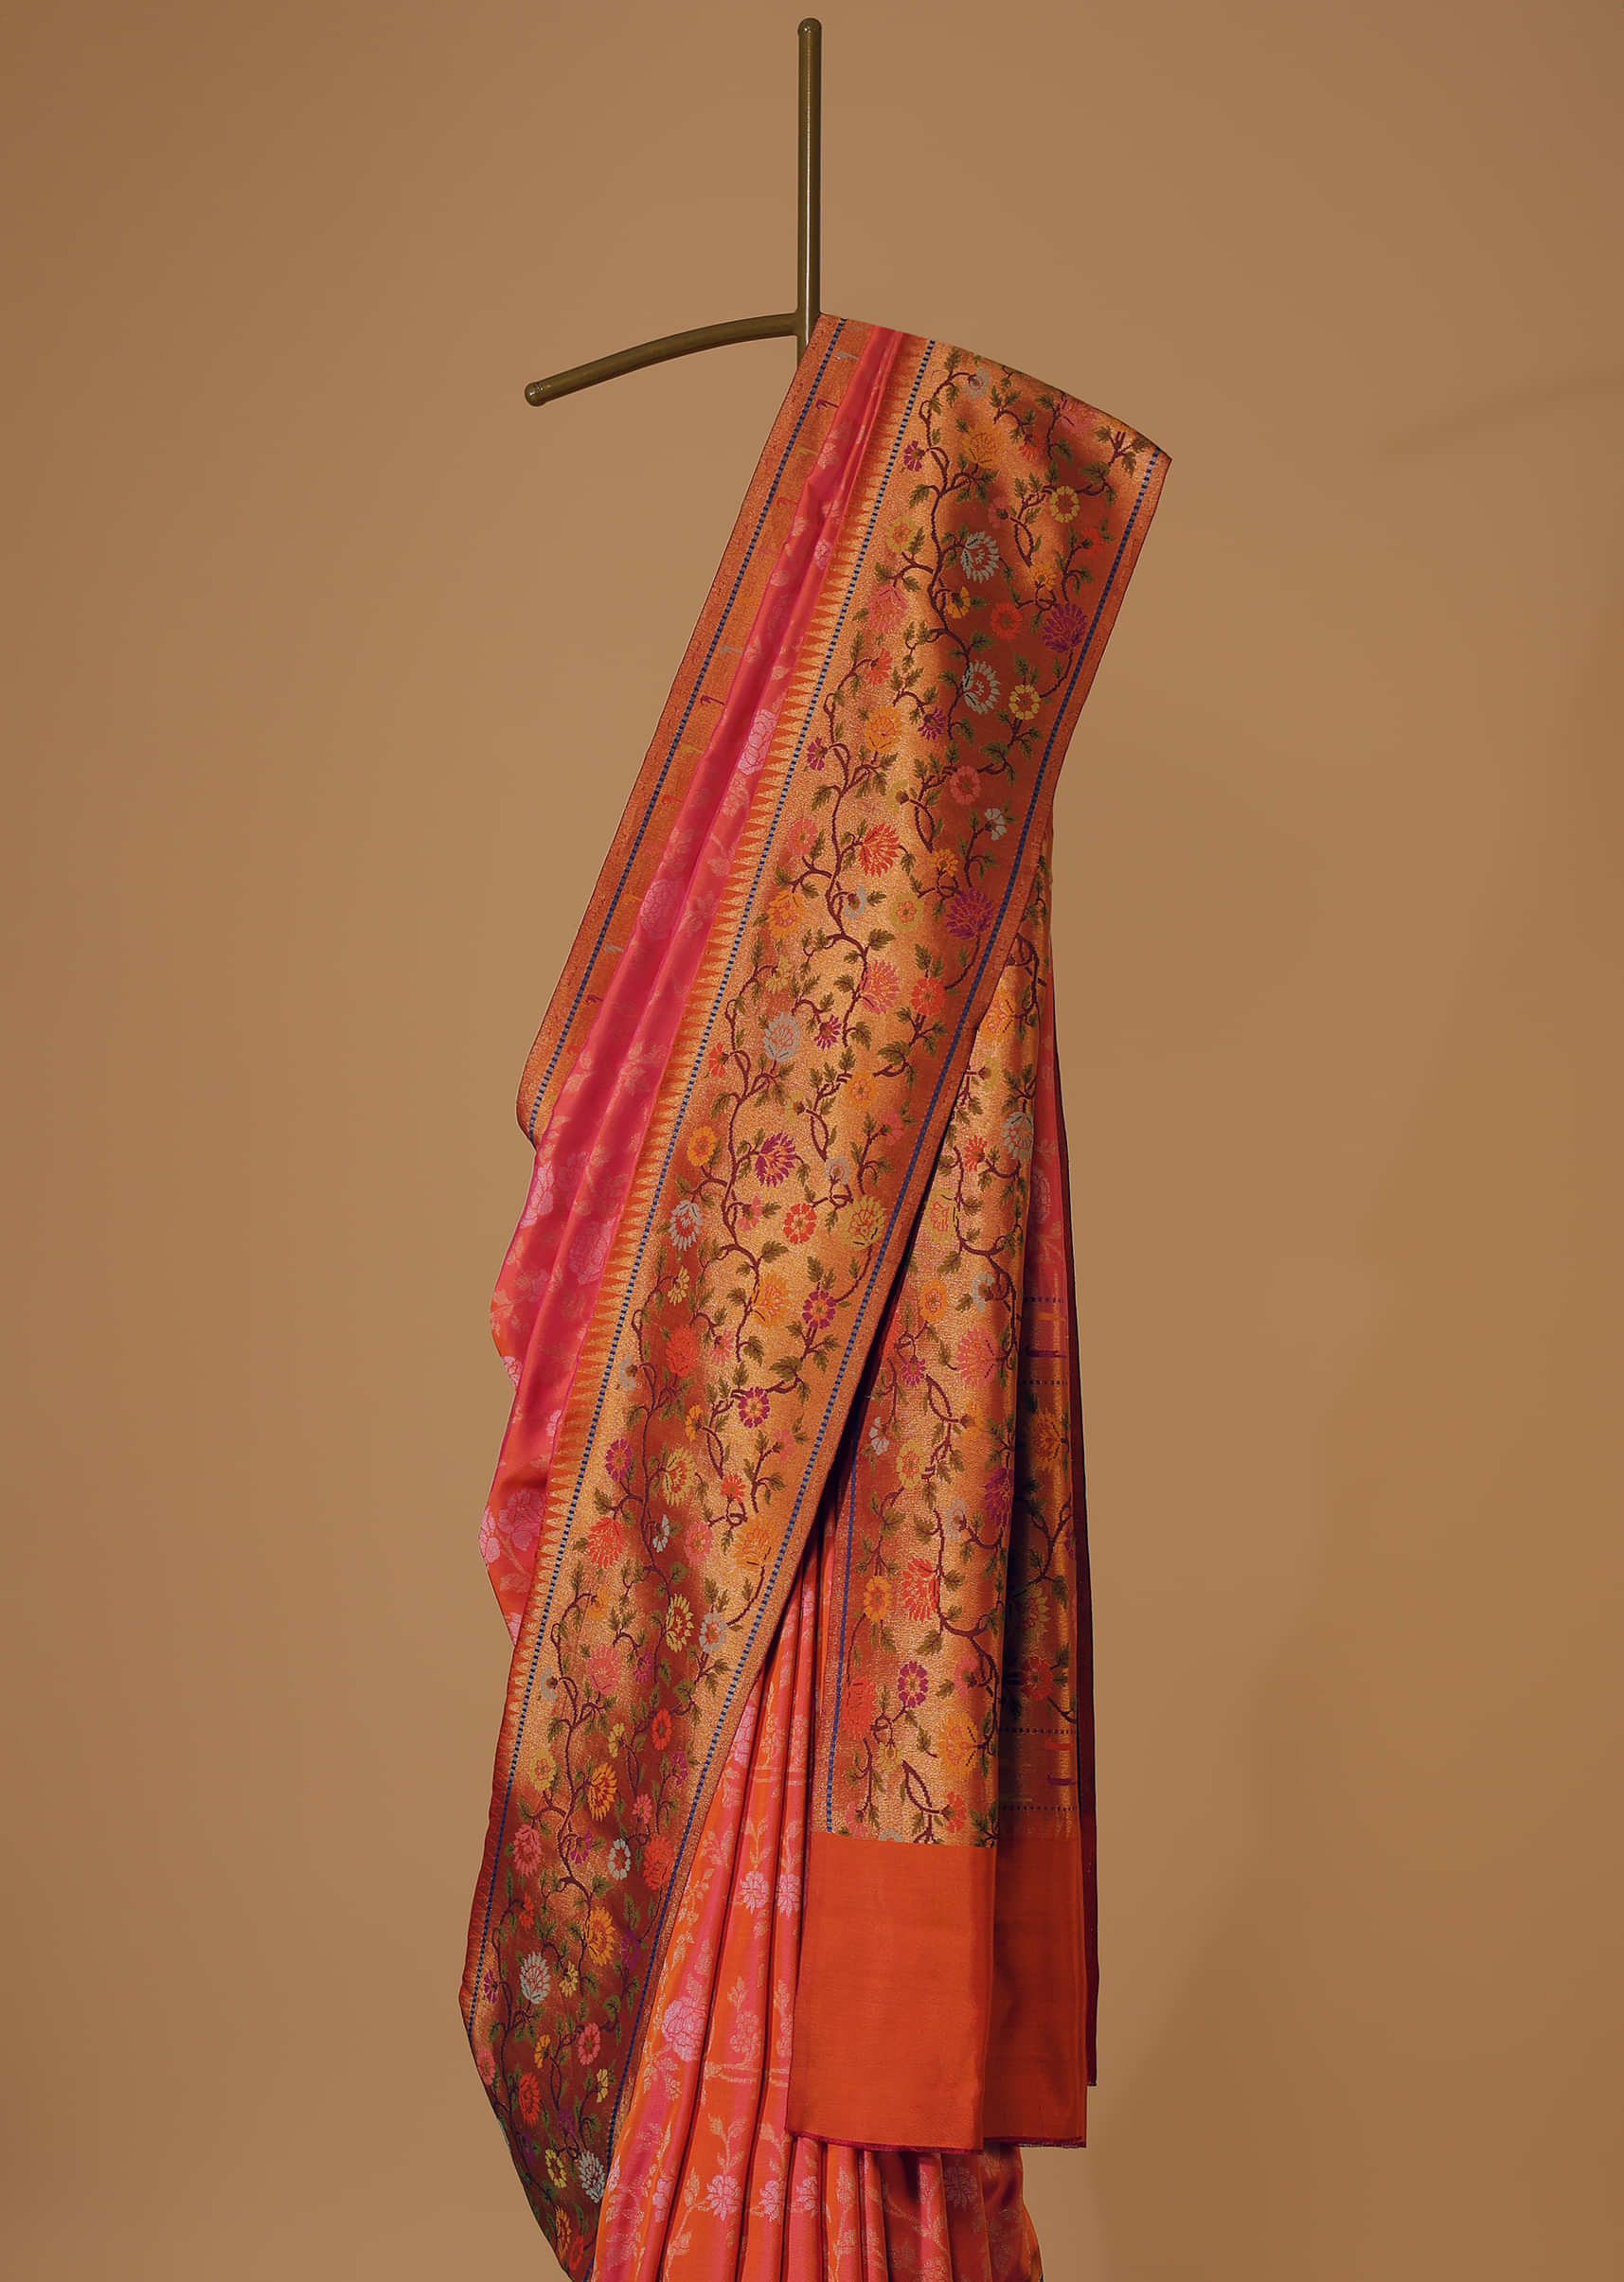 Peach Banarasi Handloom Saree In Orange Shade With Shikara Skirt Border Weave And Unstitched Blouse